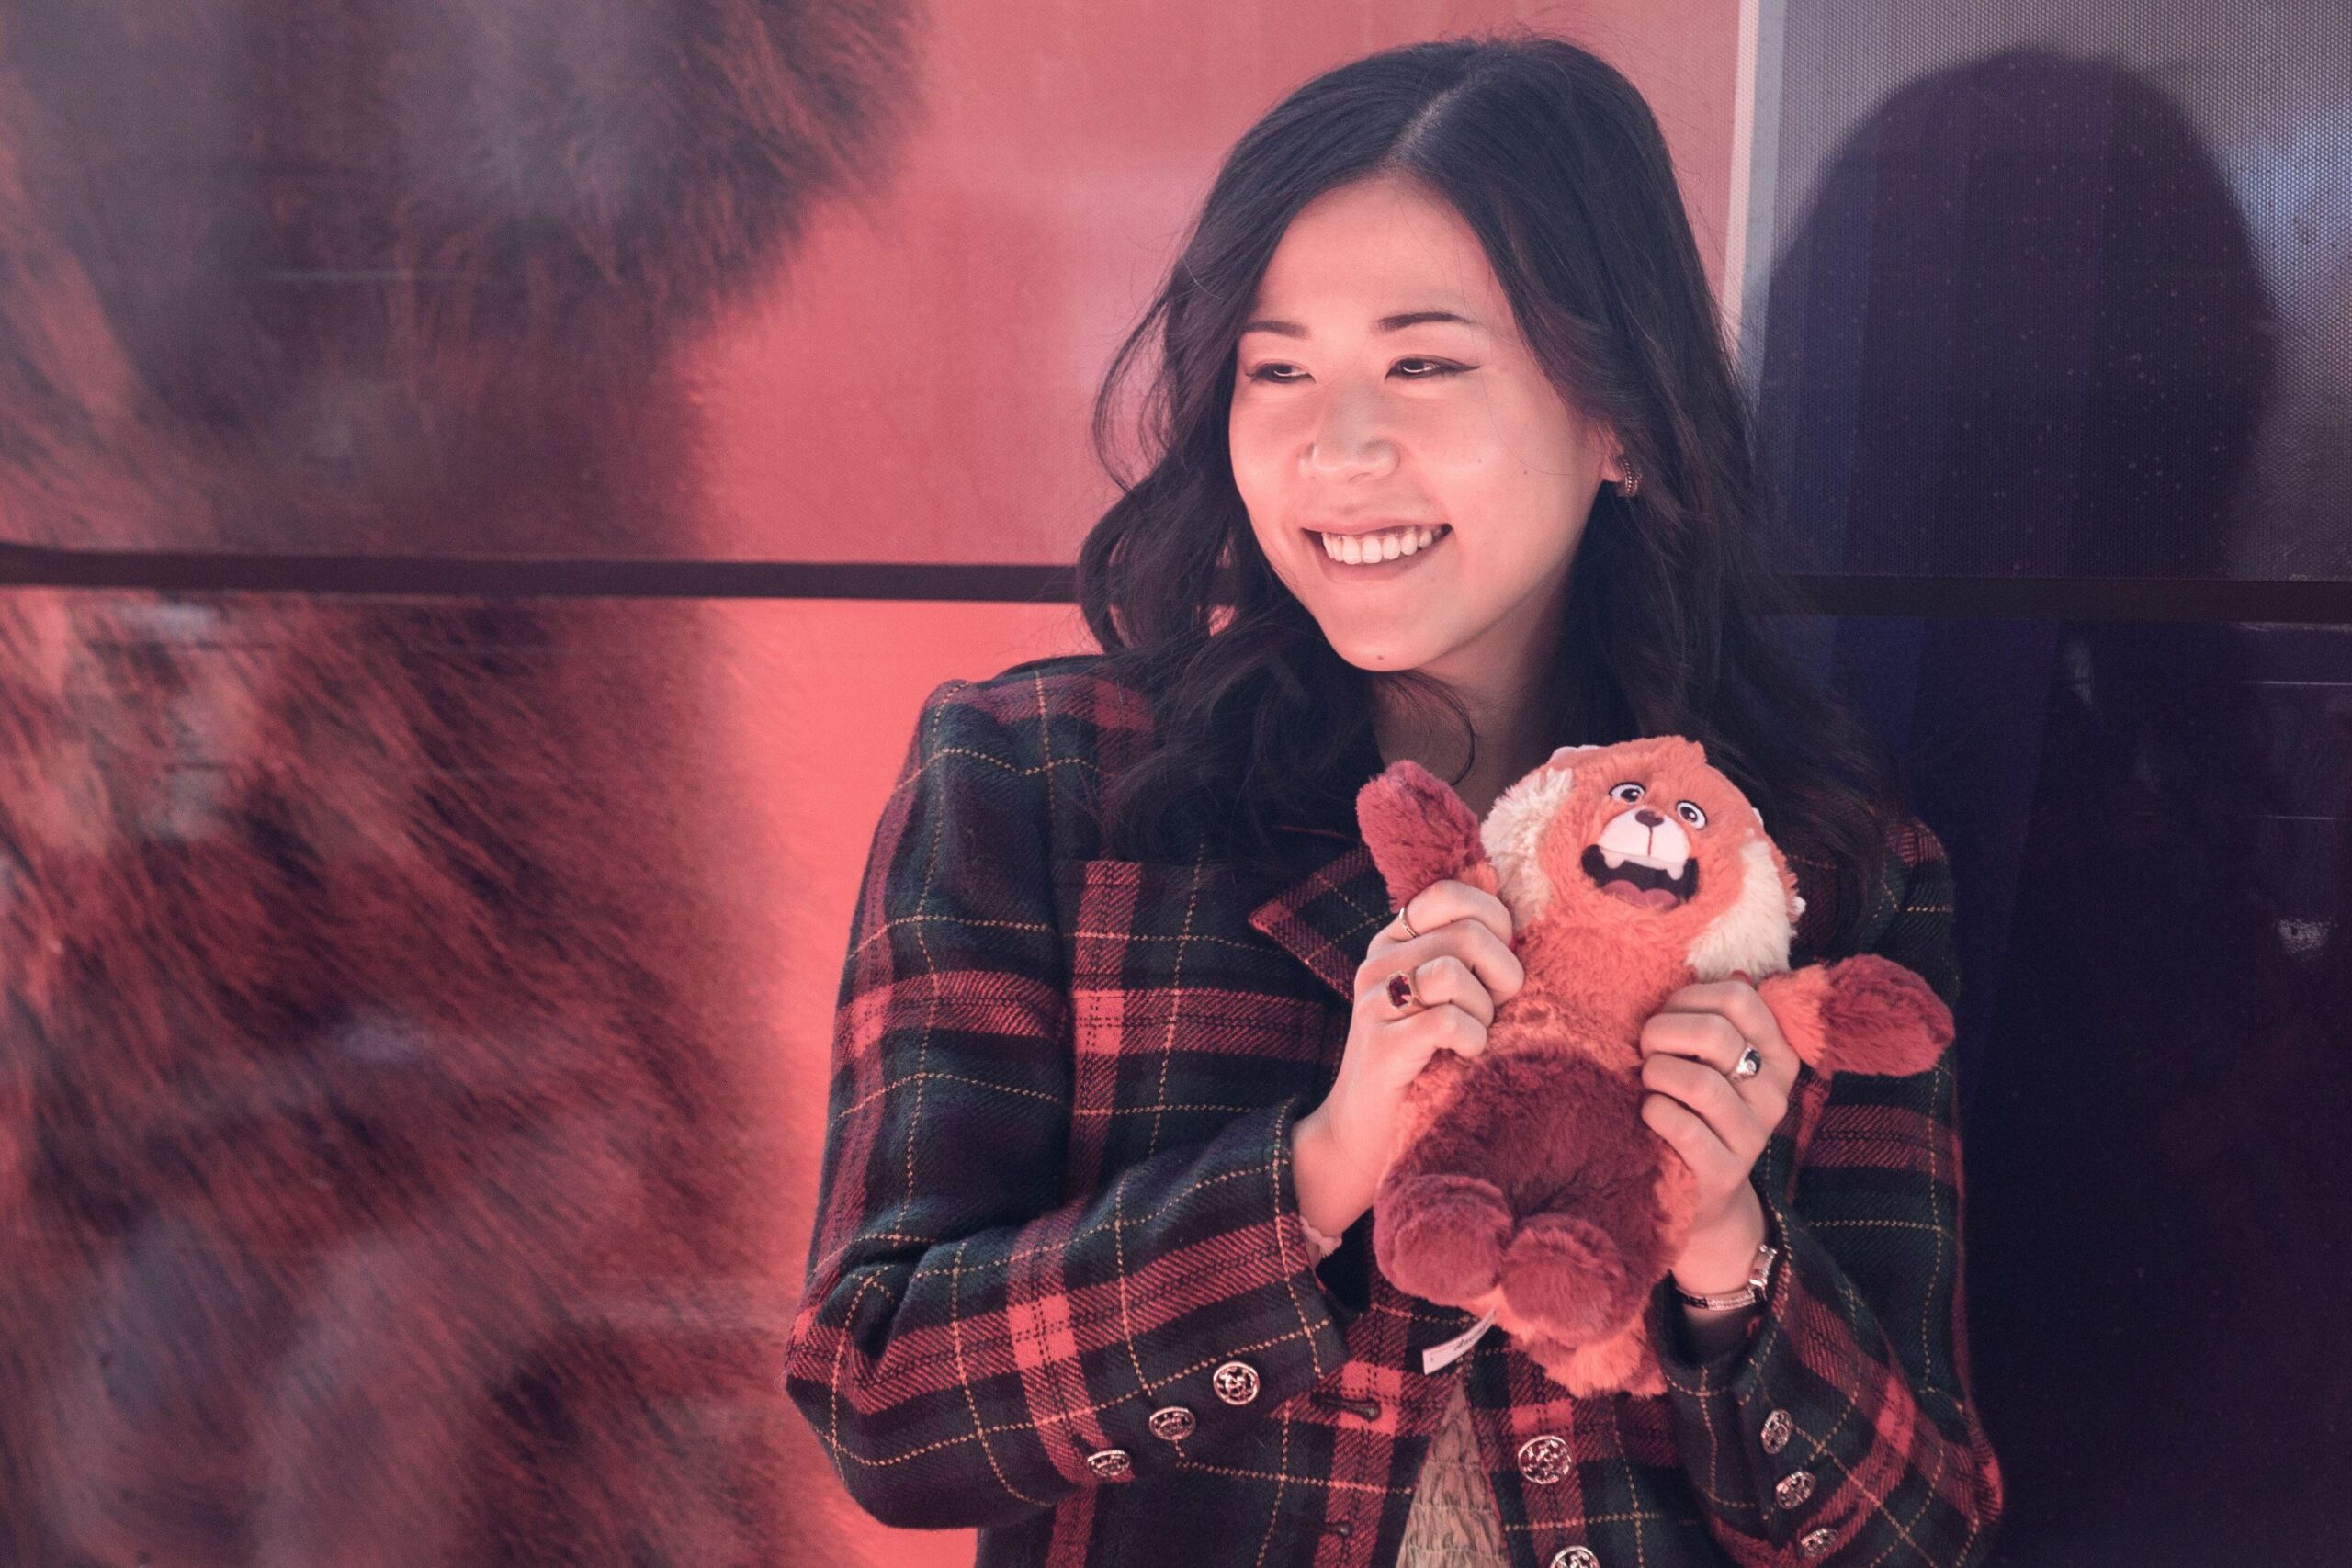 Photo of Domee Shi holding a stuffed animal.